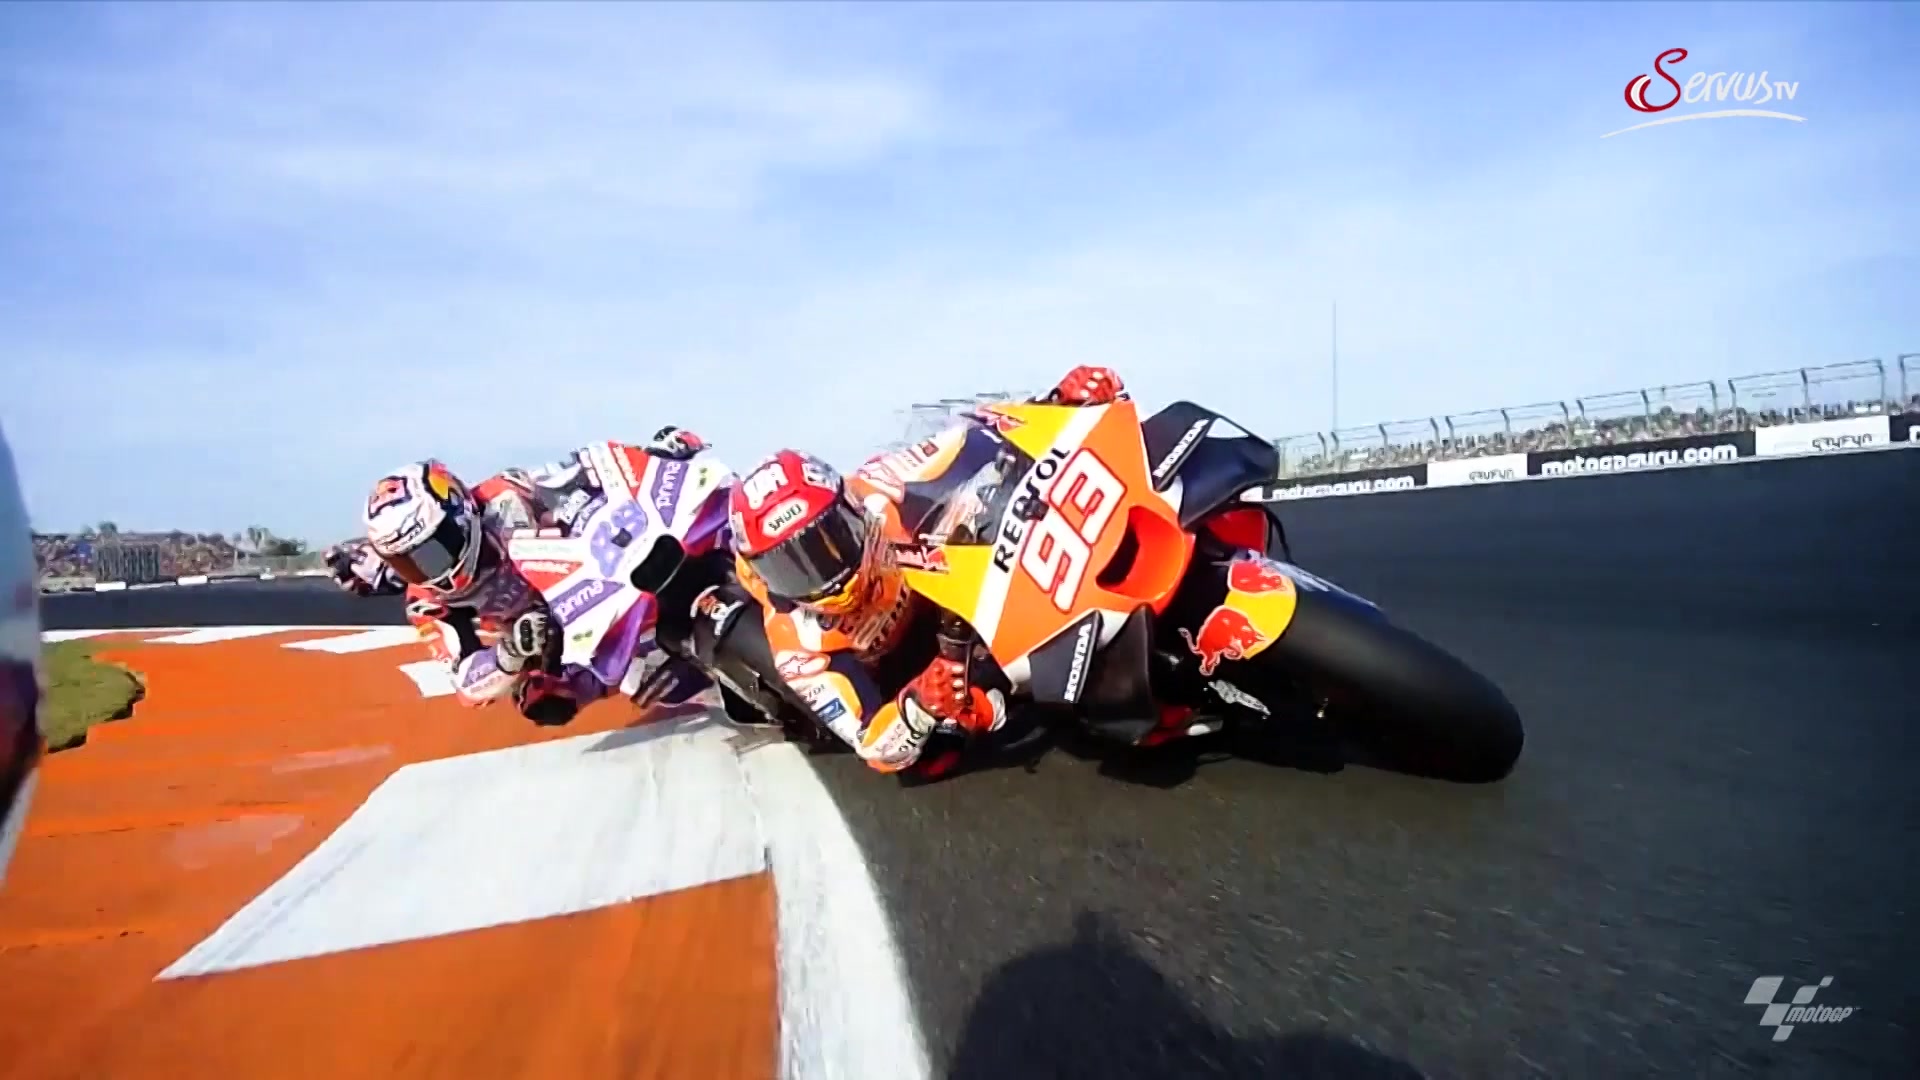 Die MotoGP LIVE bei ServusTV On Livestreams, Highlights, Videos